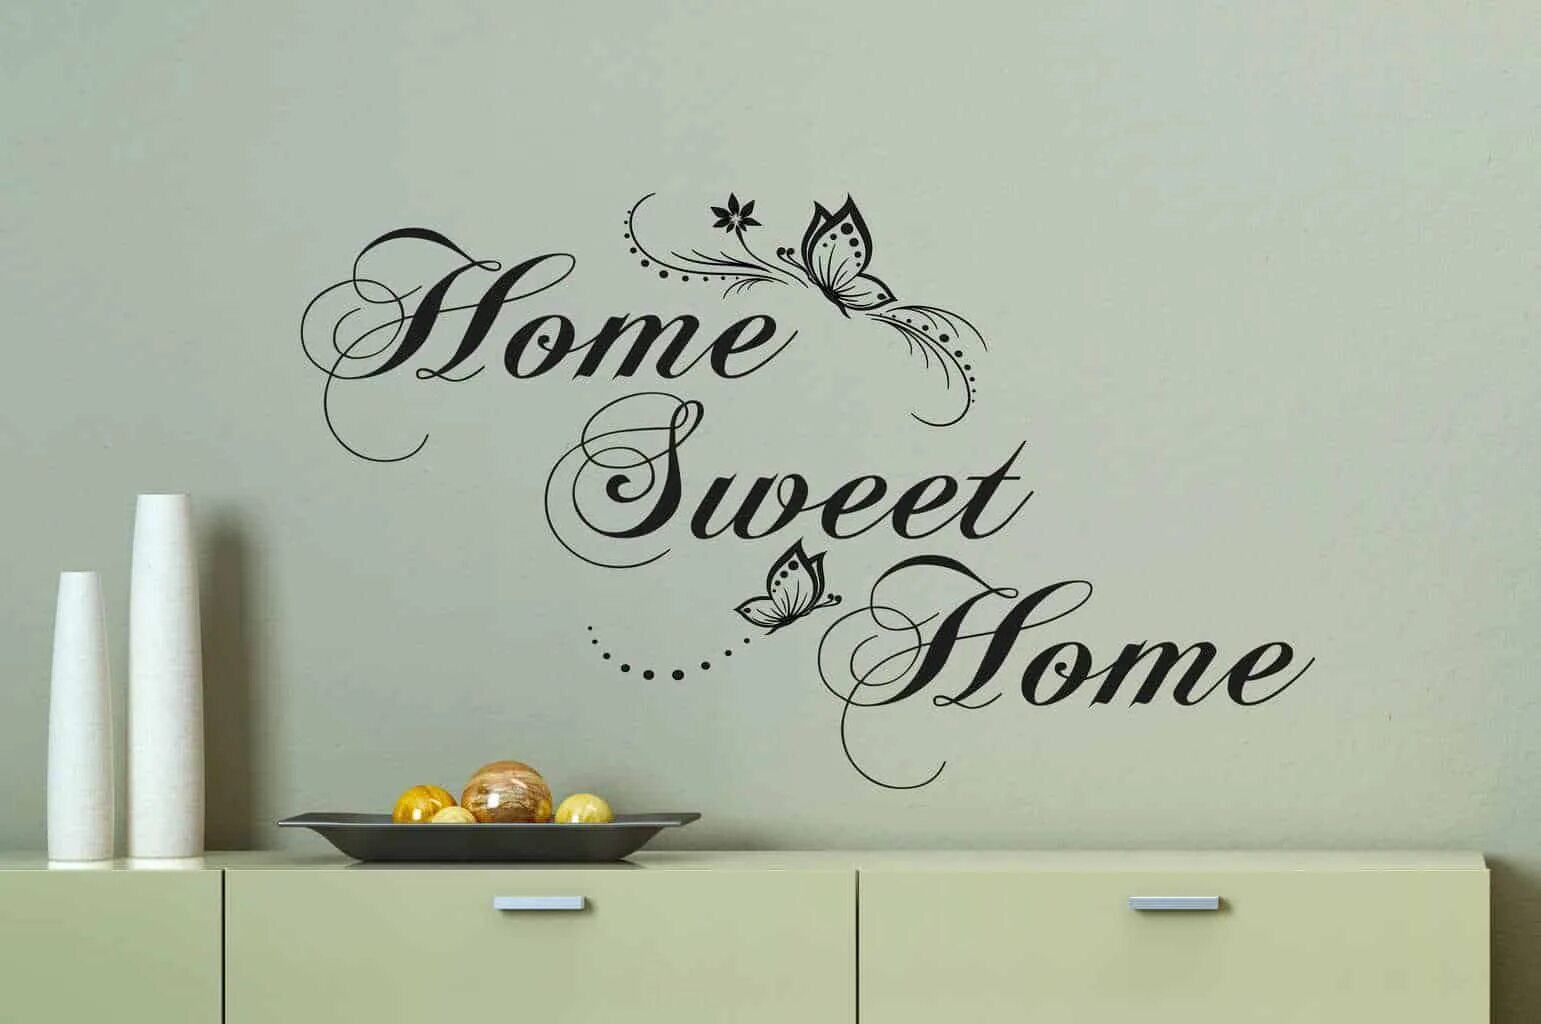 Home sweet home 1. Надпись Home. Надписи для домашнего декора. Трафарет Home. Надпись Свит хоум.